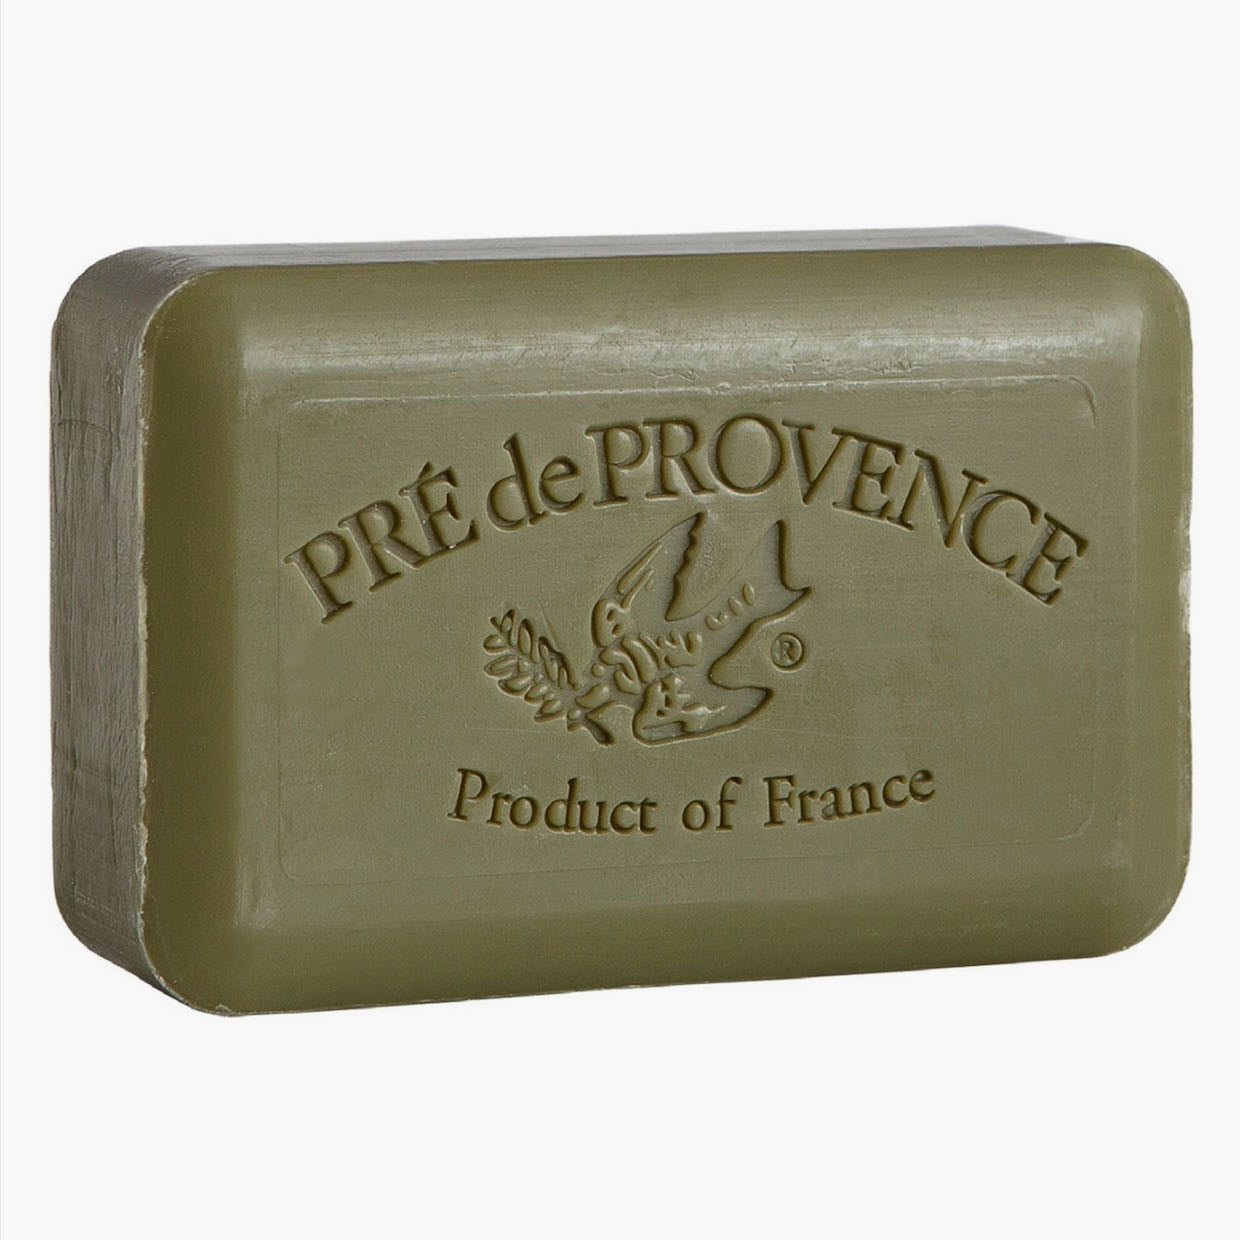 Pré de Provence Traditional Natural Artisanal Olive Oil Soap 